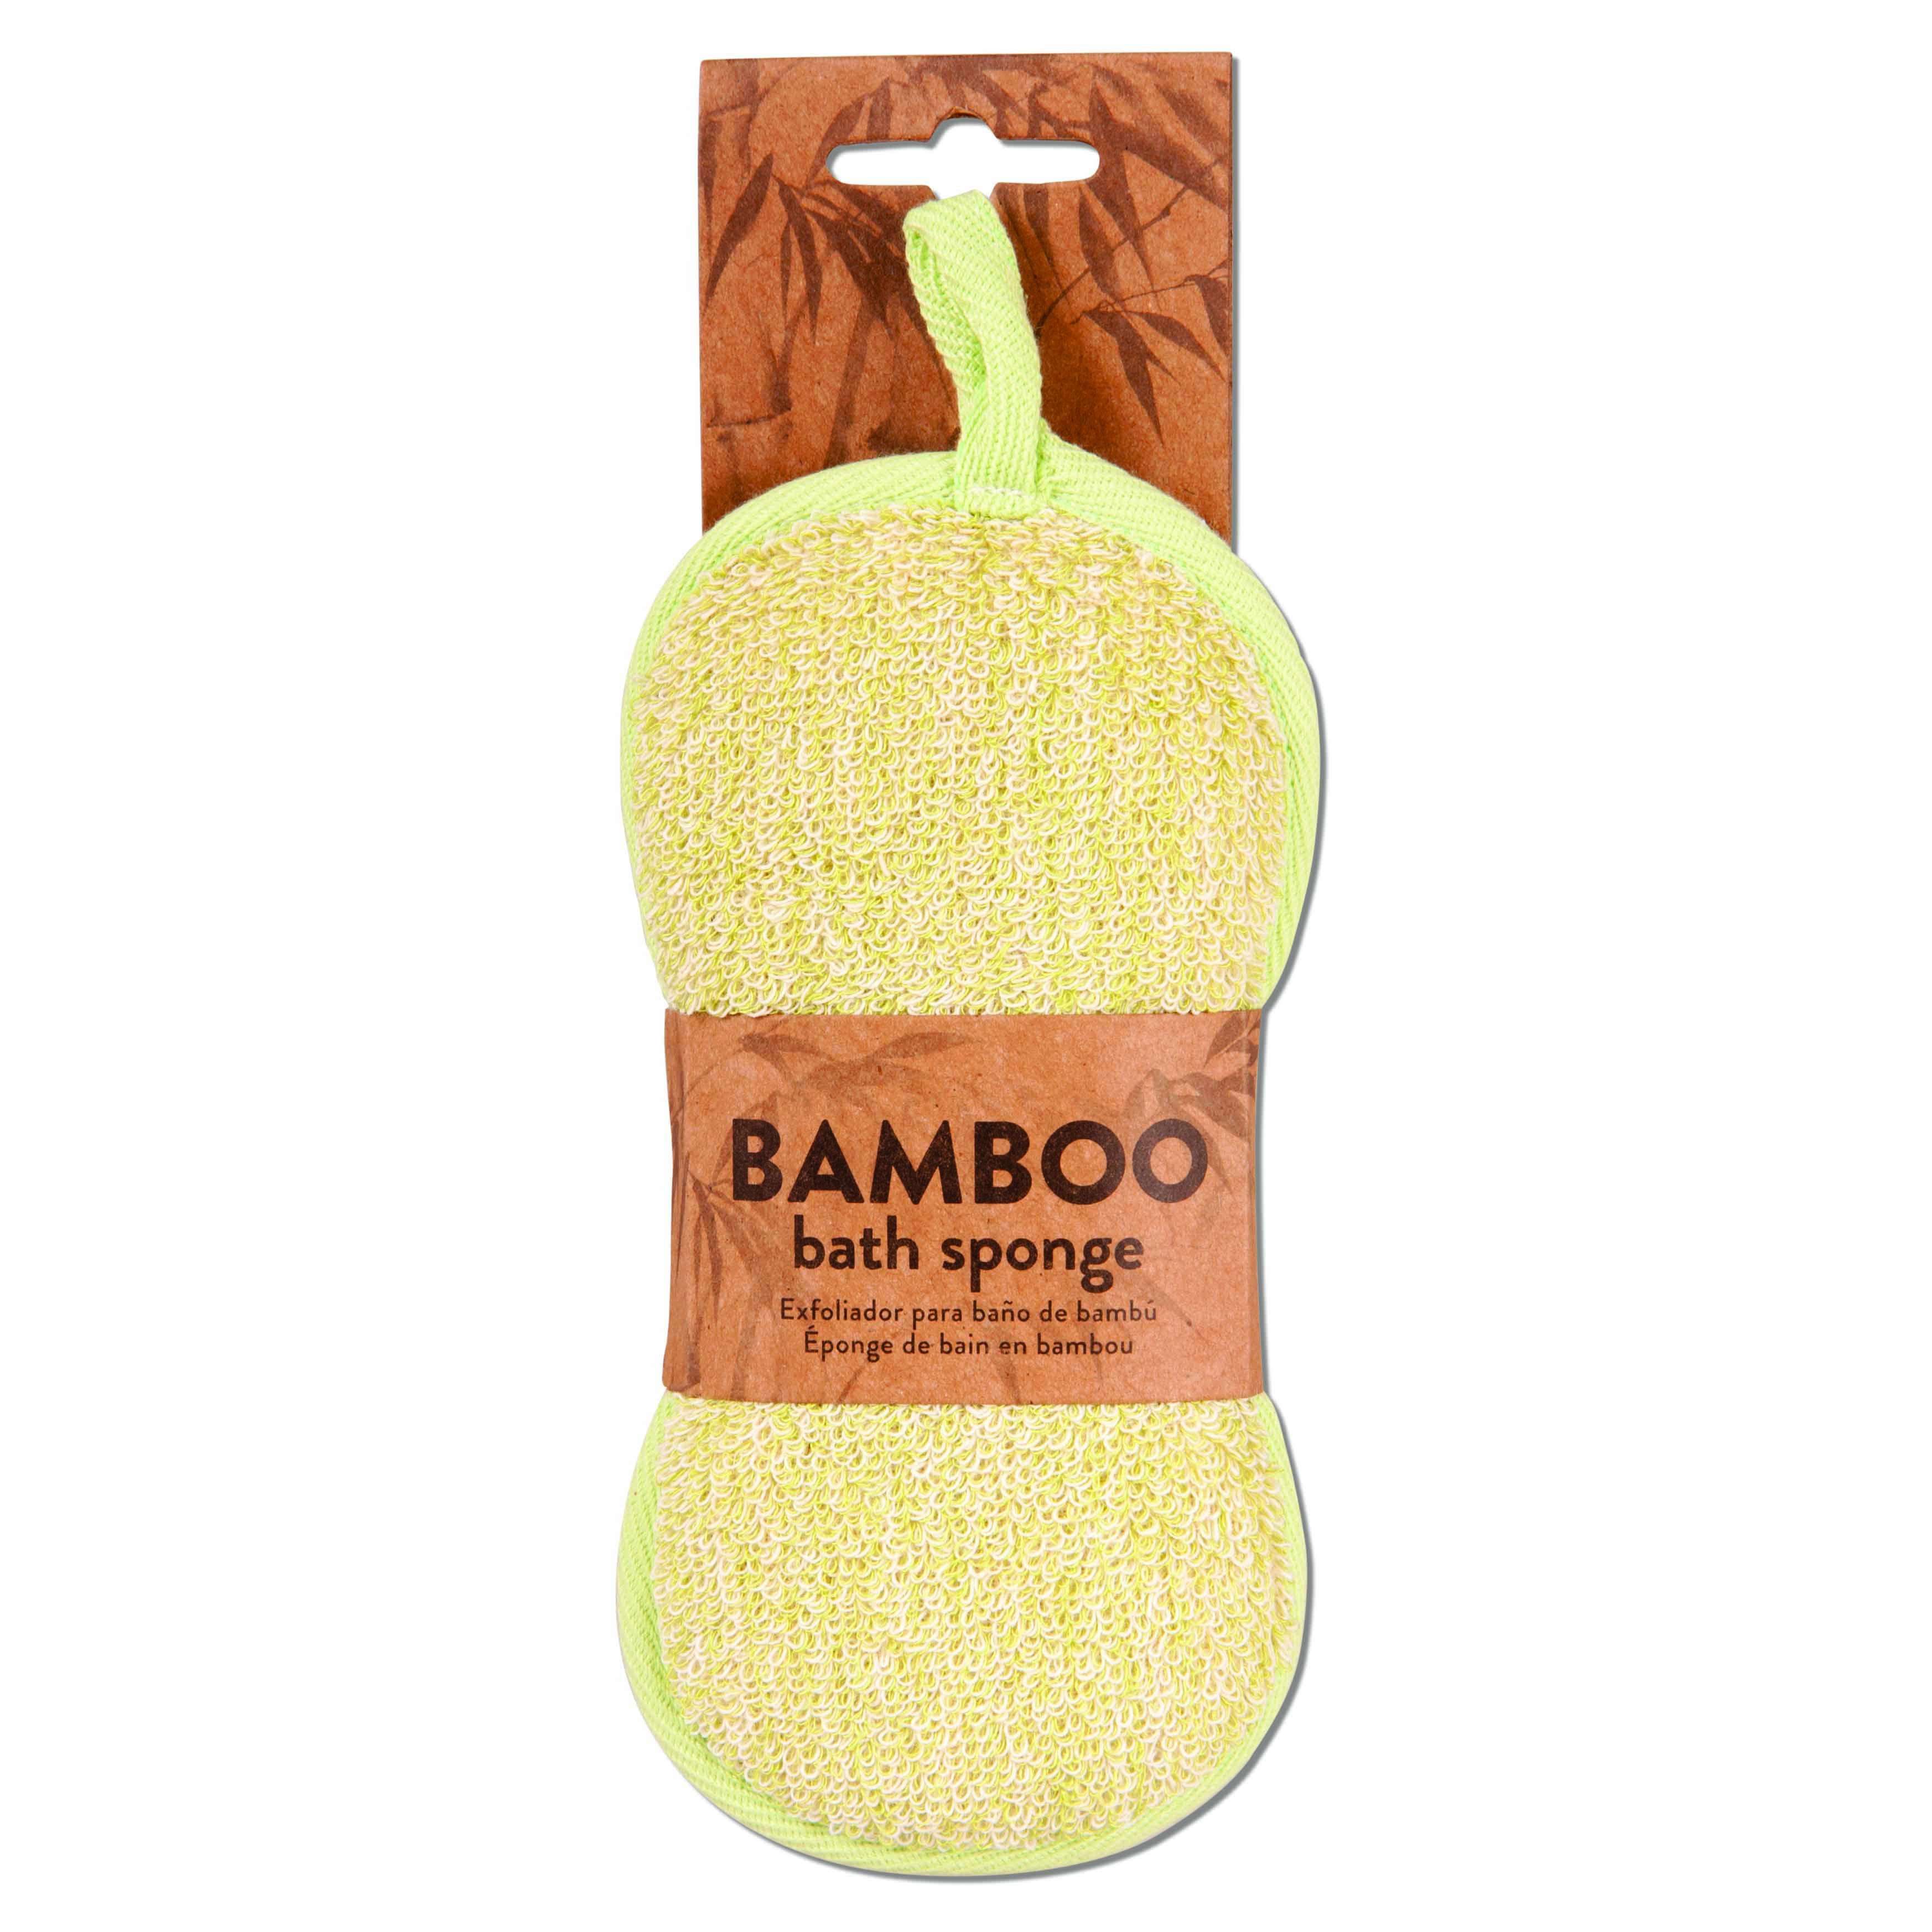 Bamboo Bath Sponge - Dollars and Sense